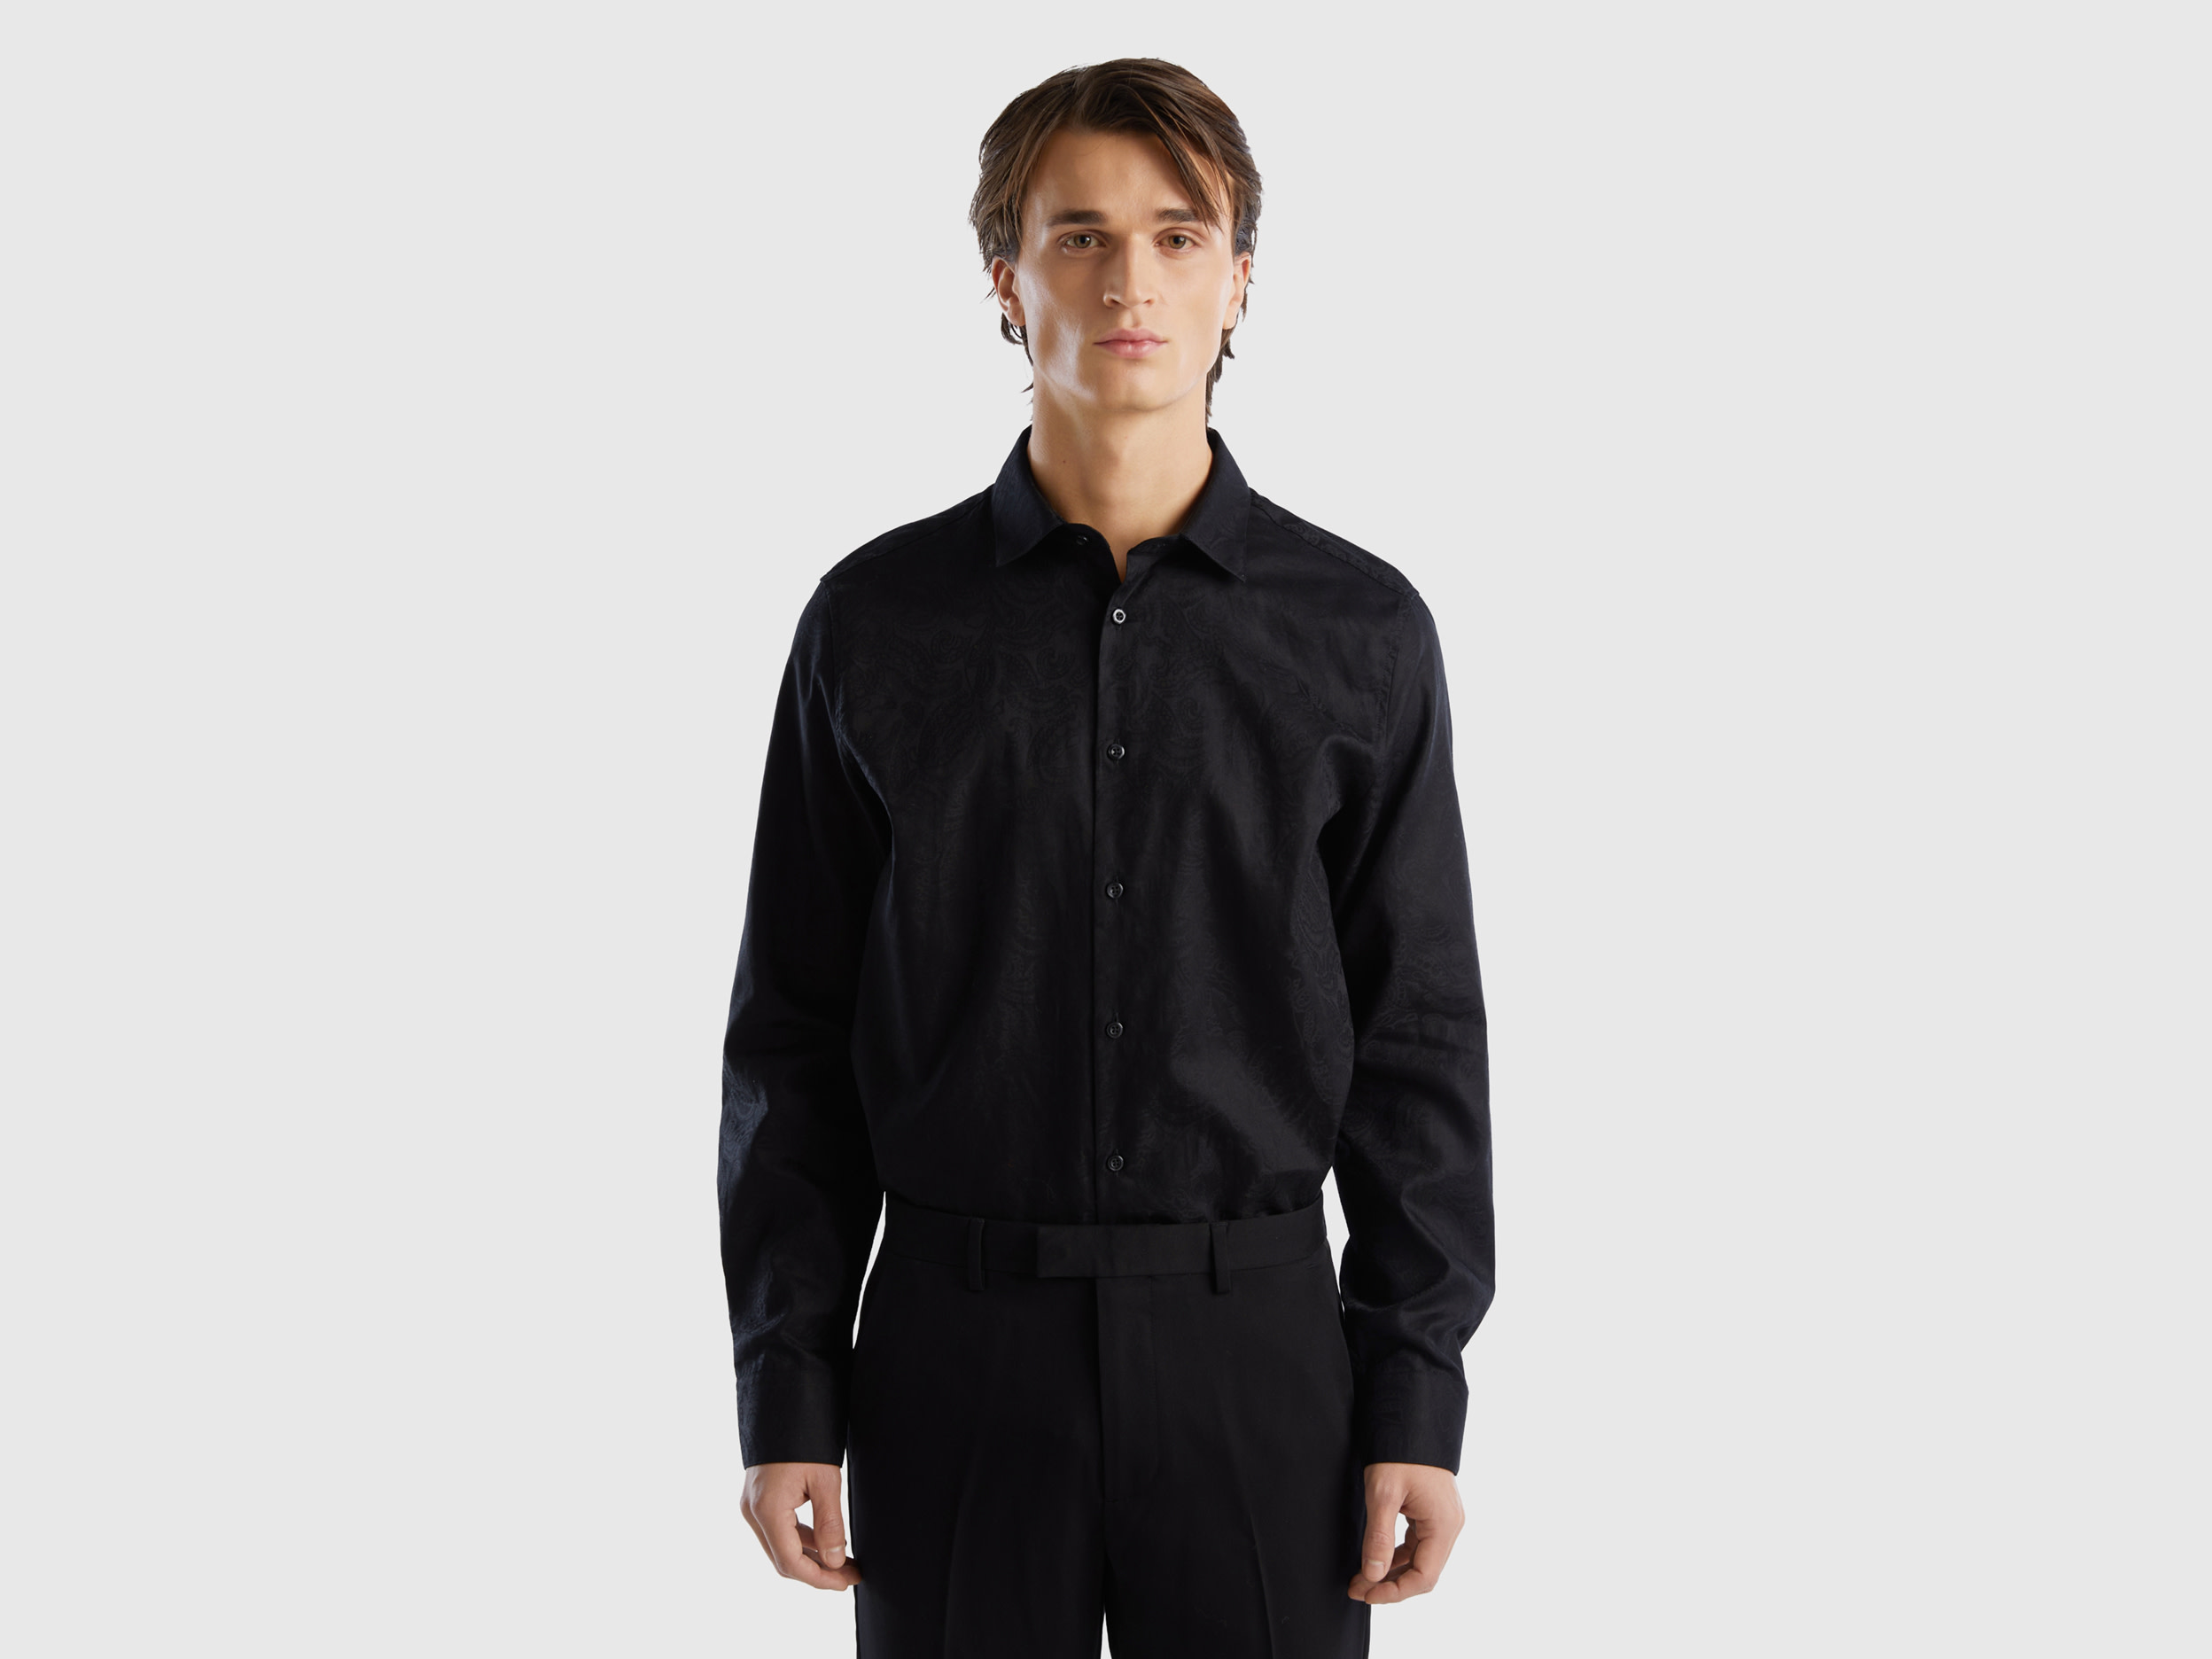 Benetton, Shirt With Jacquard Pattern, size S, Black, Men